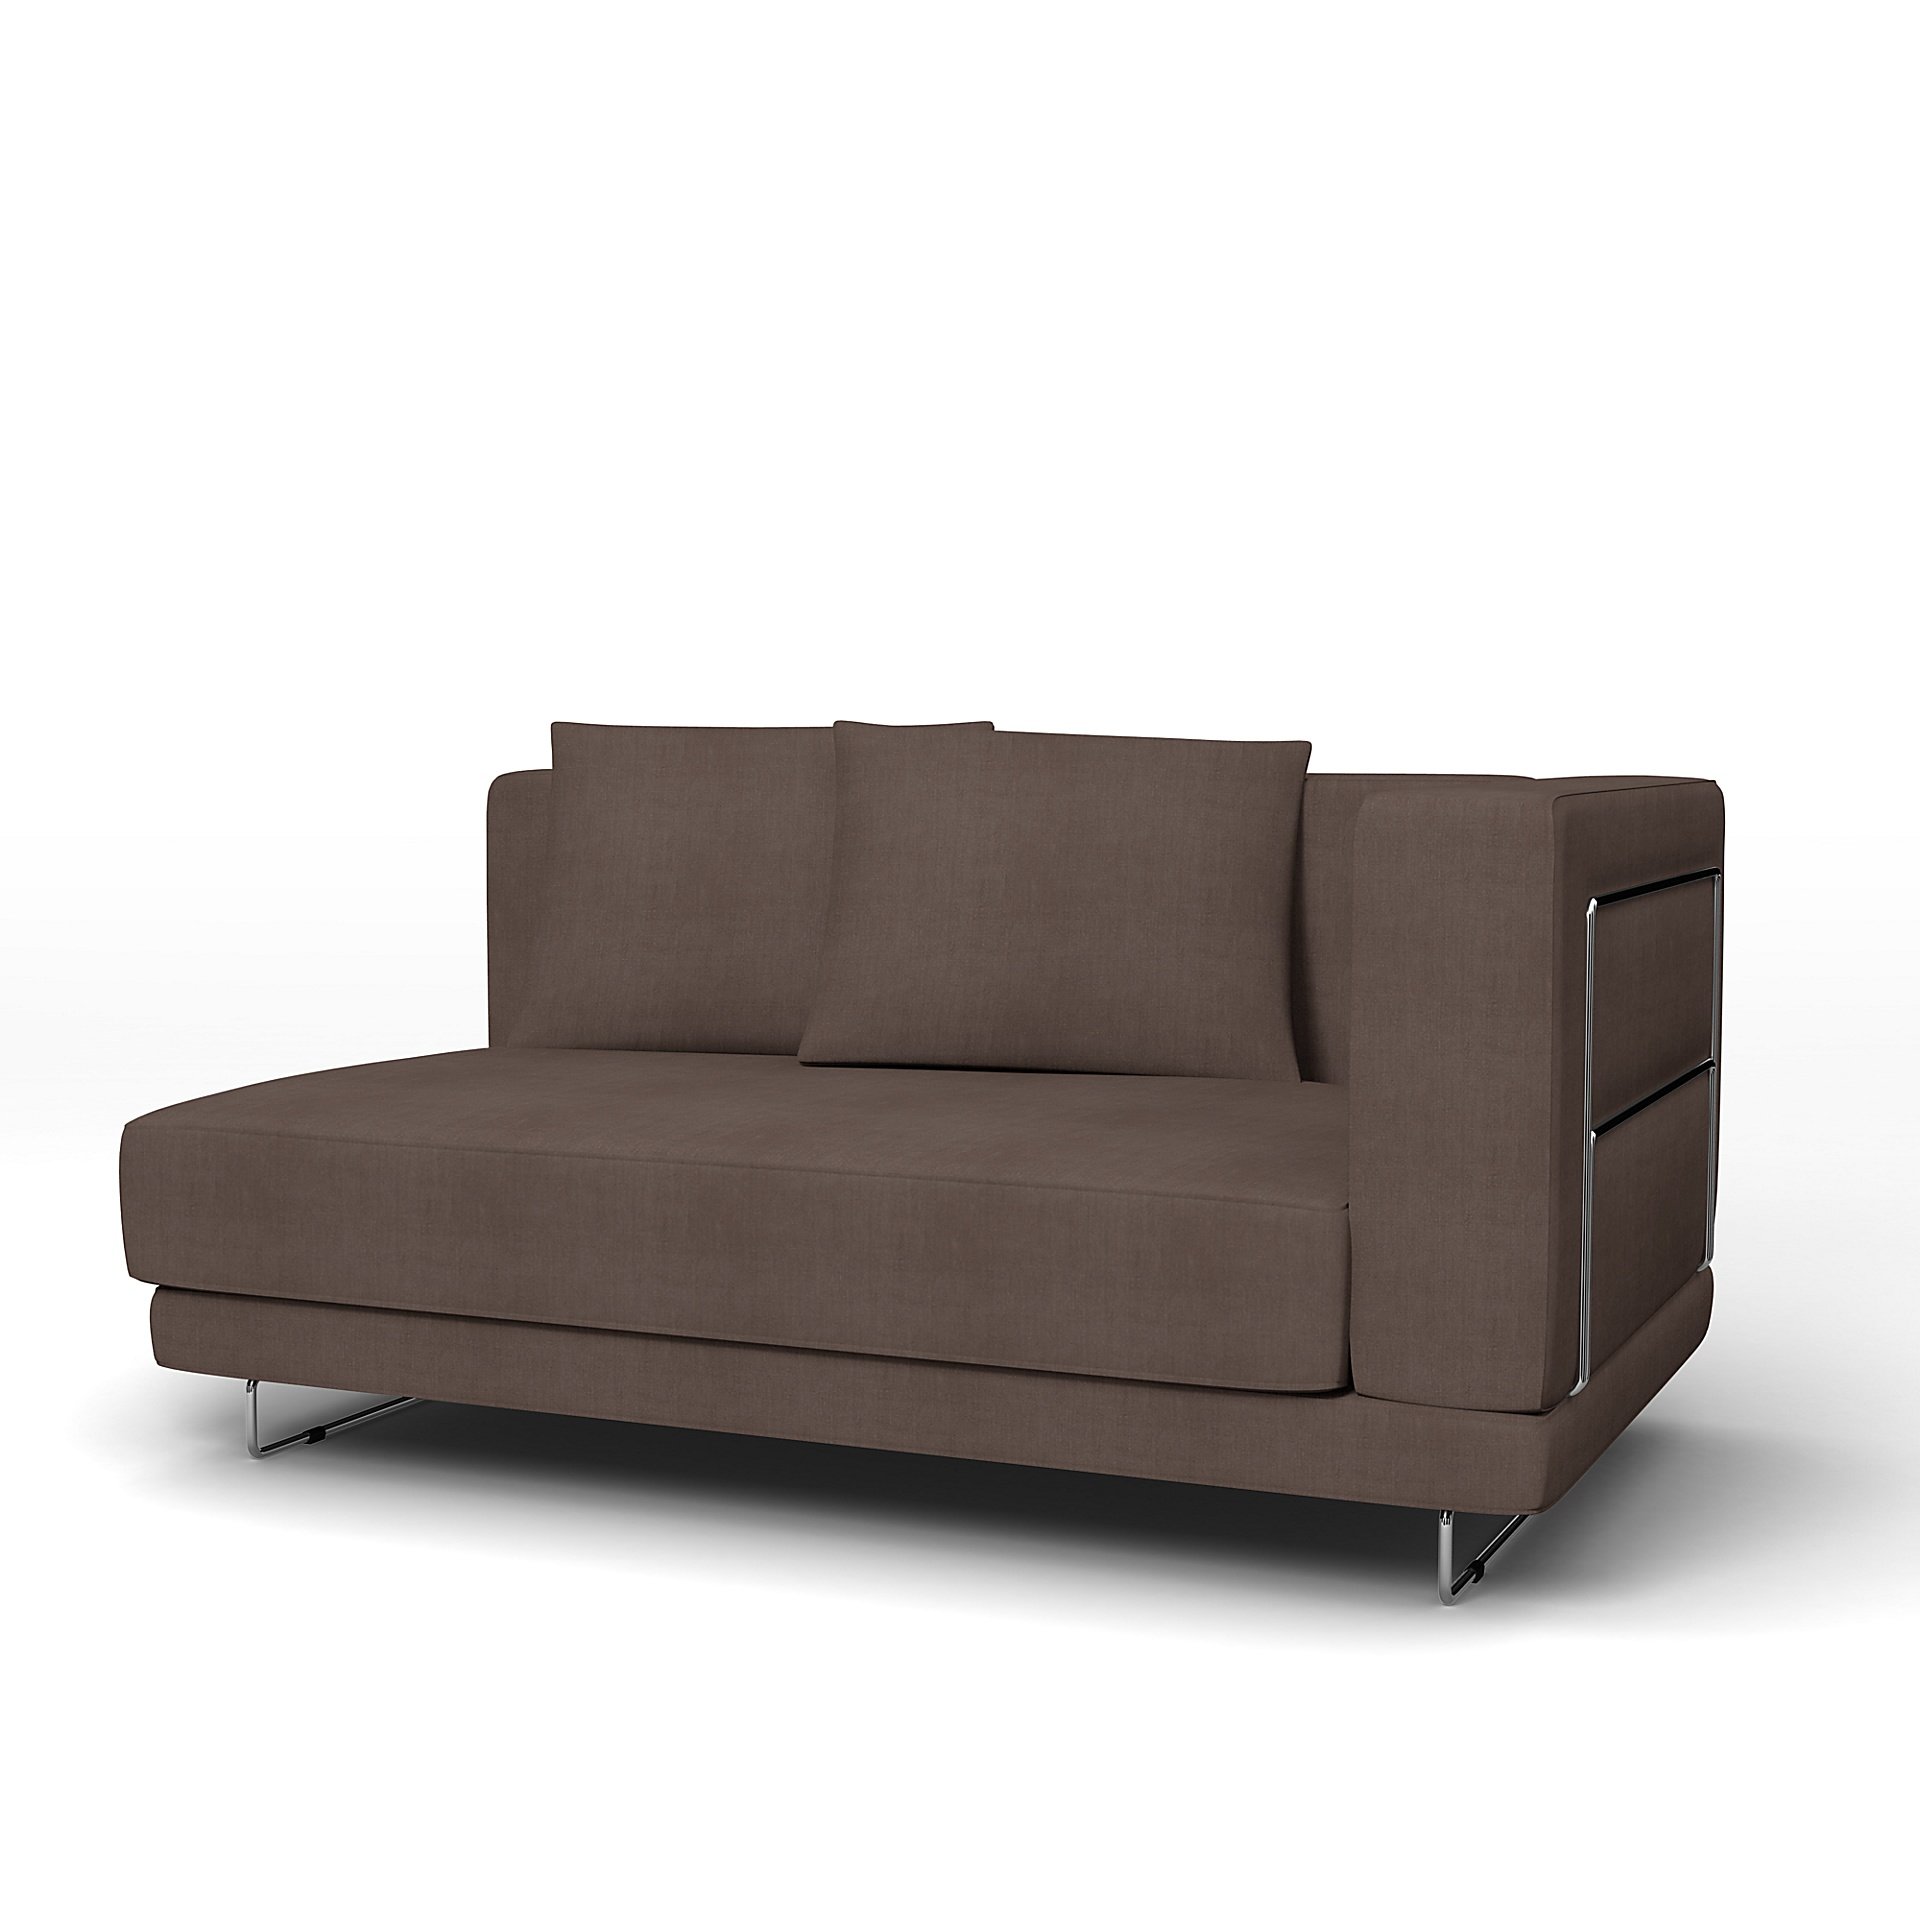 IKEA - Tylosand Sofa with Armrest Cover, Cocoa, Linen - Bemz